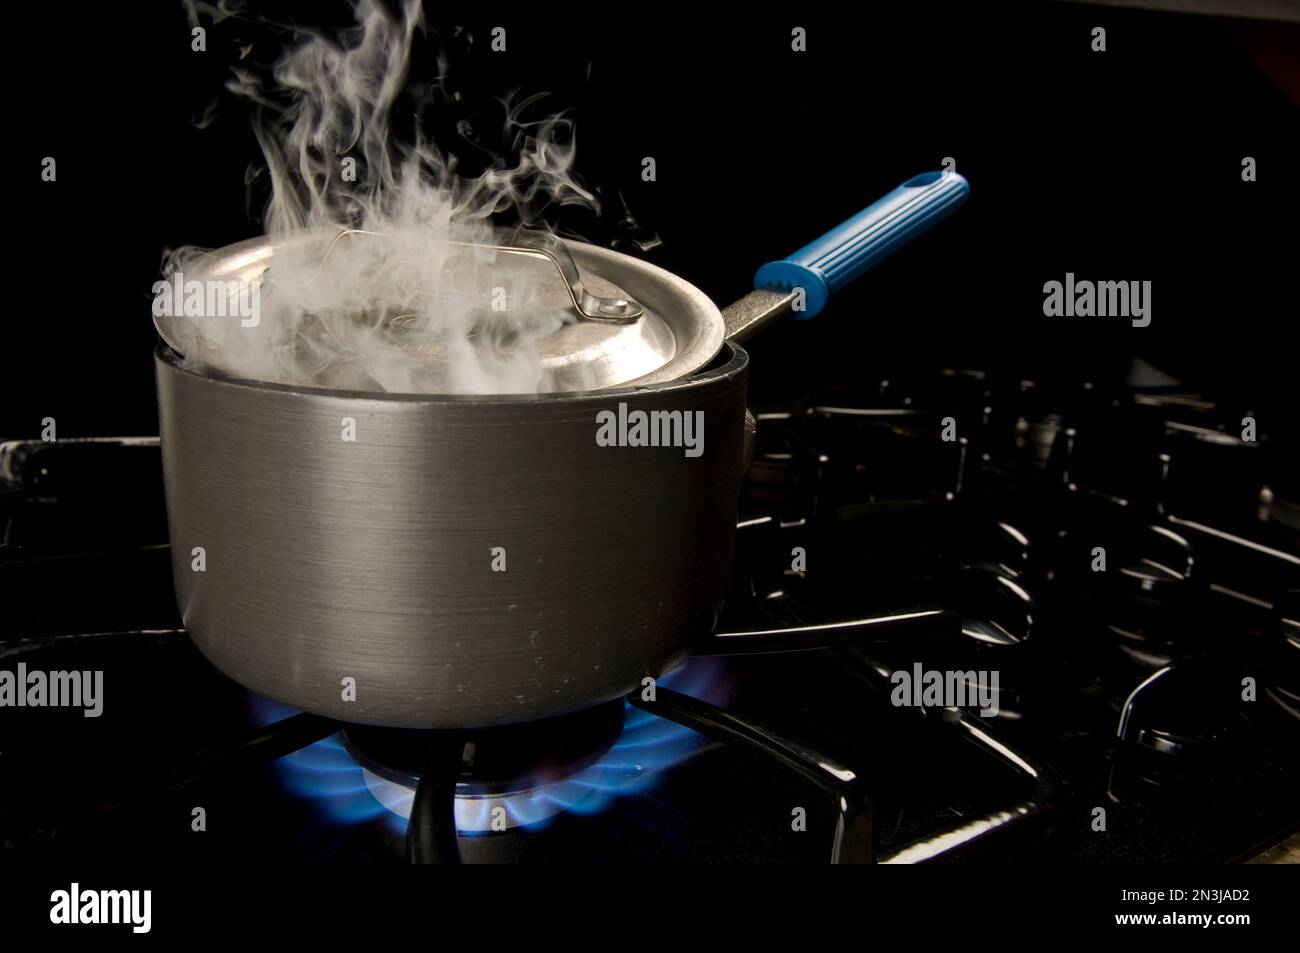 Pot Steam Kitchen Aroma Stock Photo by ©a_widz 369224150